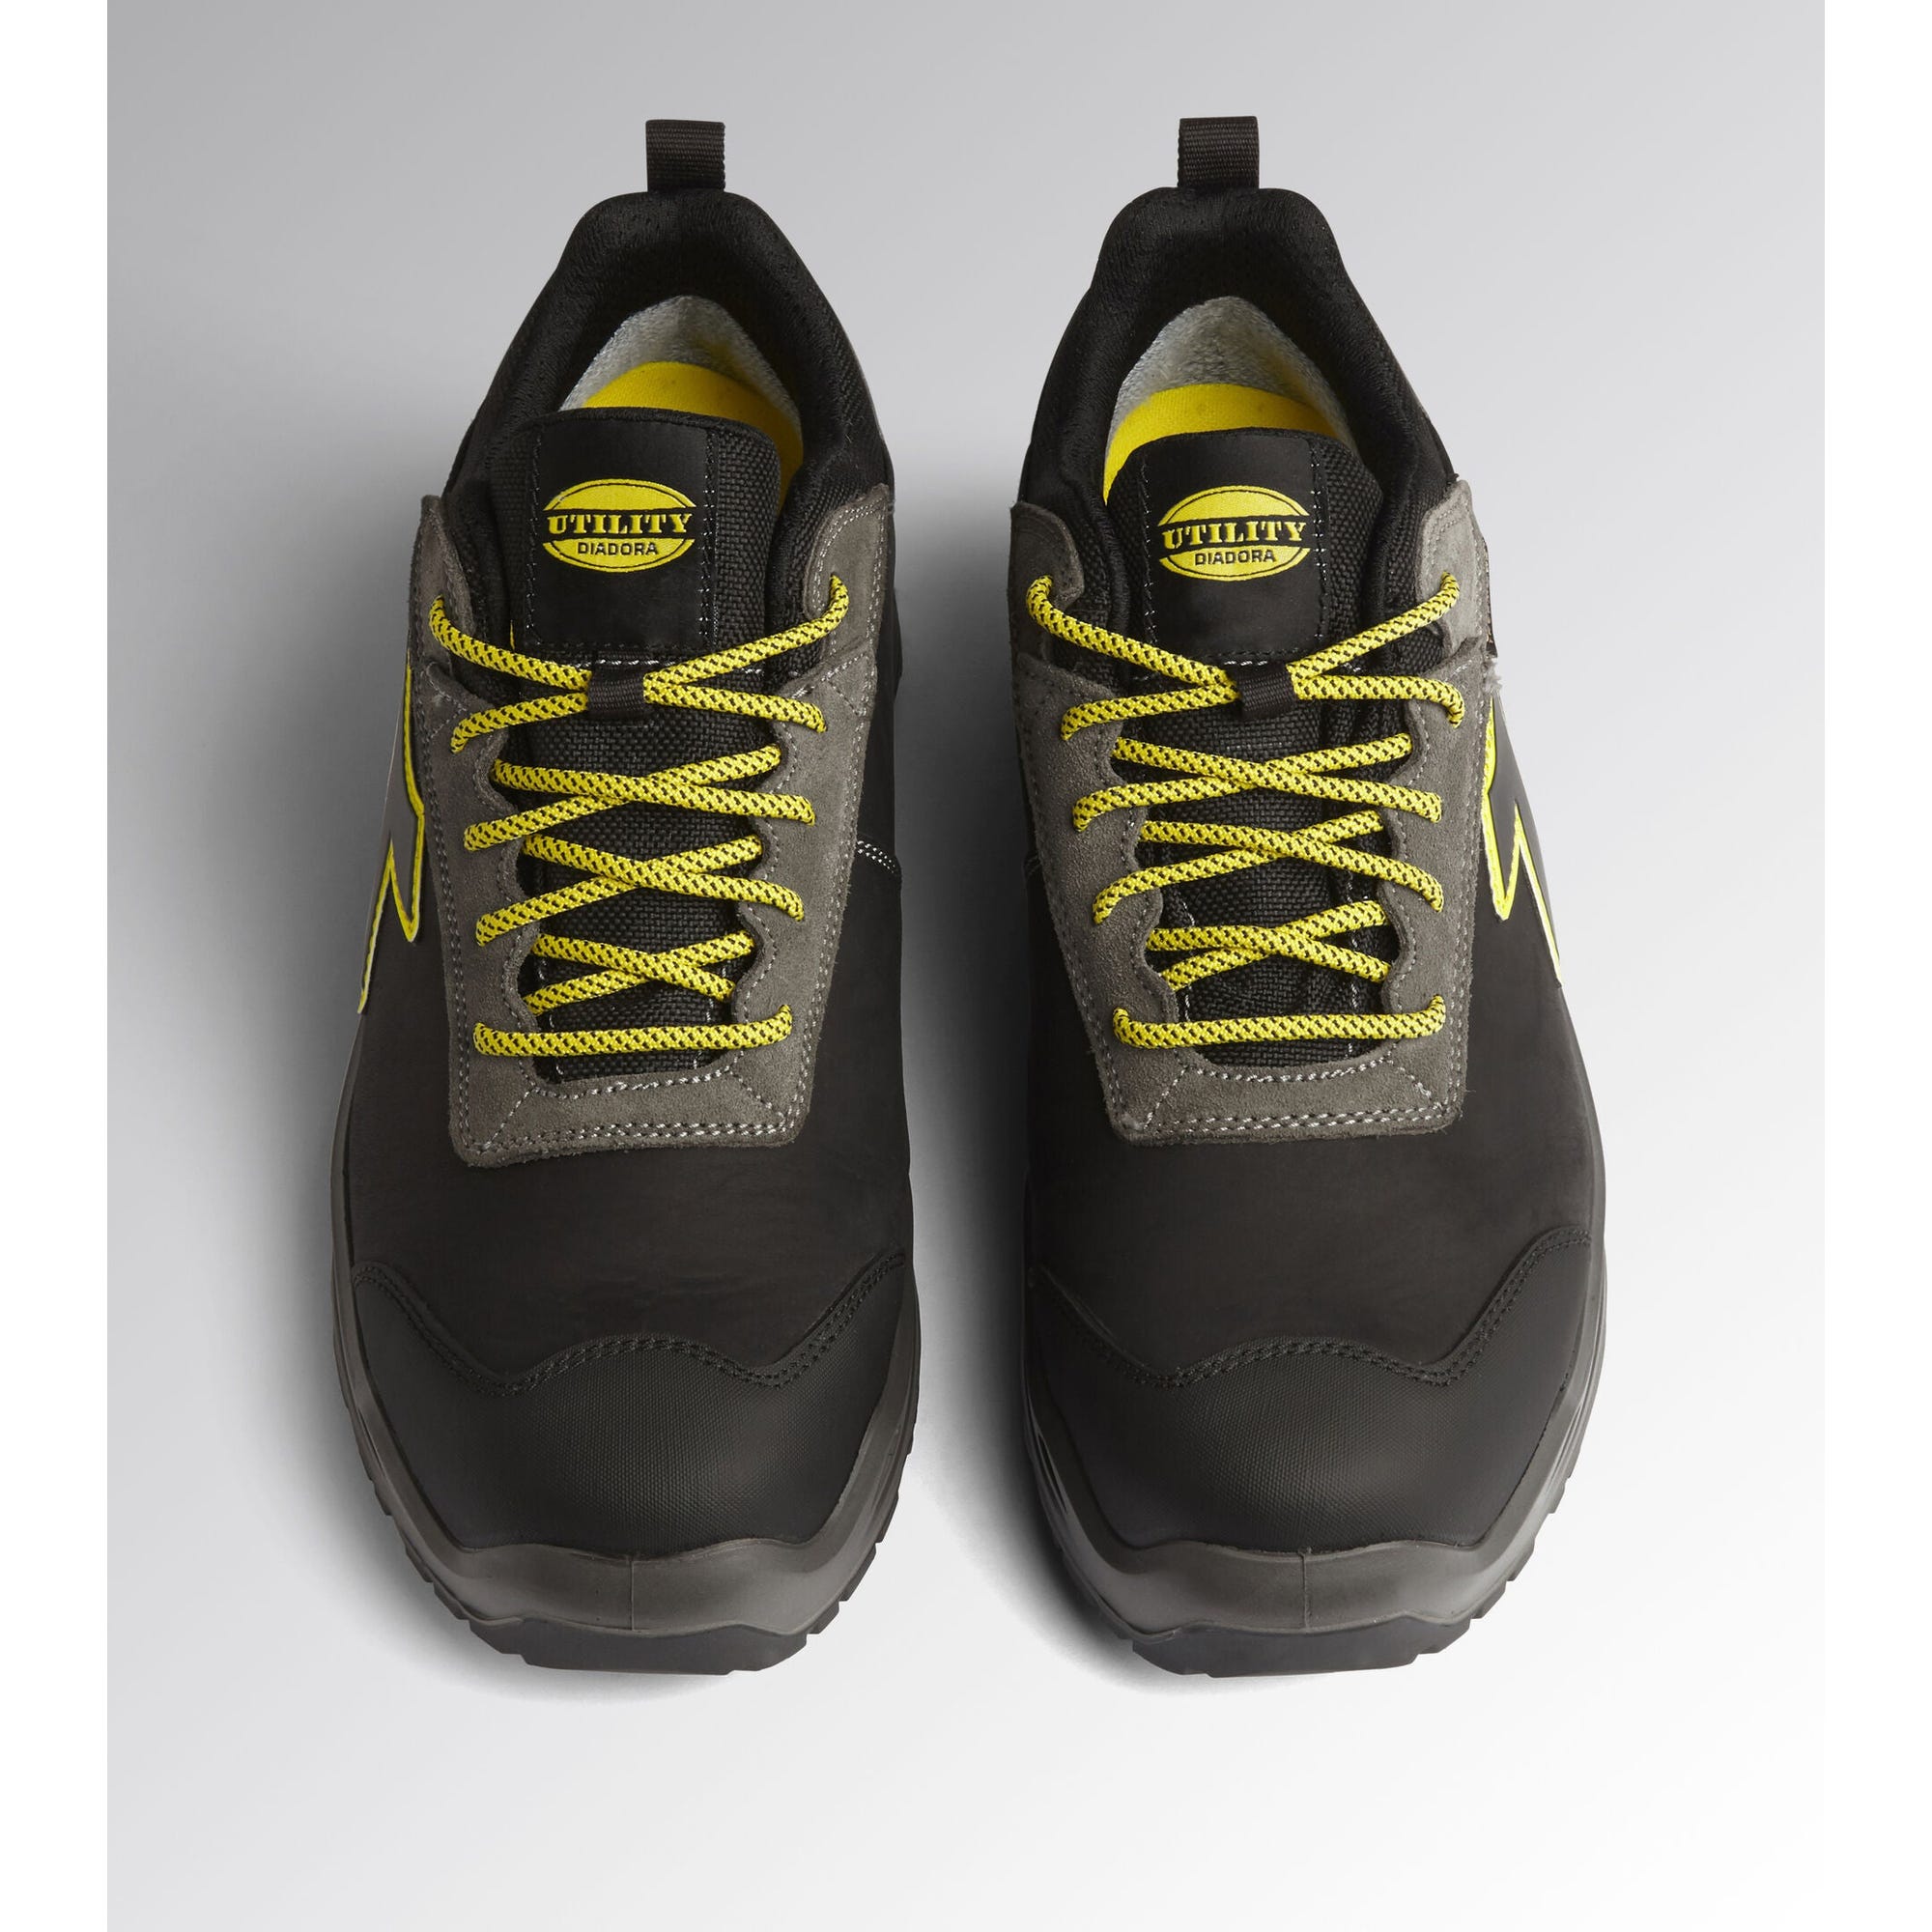 Chaussures imperméables thermo-isolantes SPORT DIATEX S3 Noir / Jaune 44 7